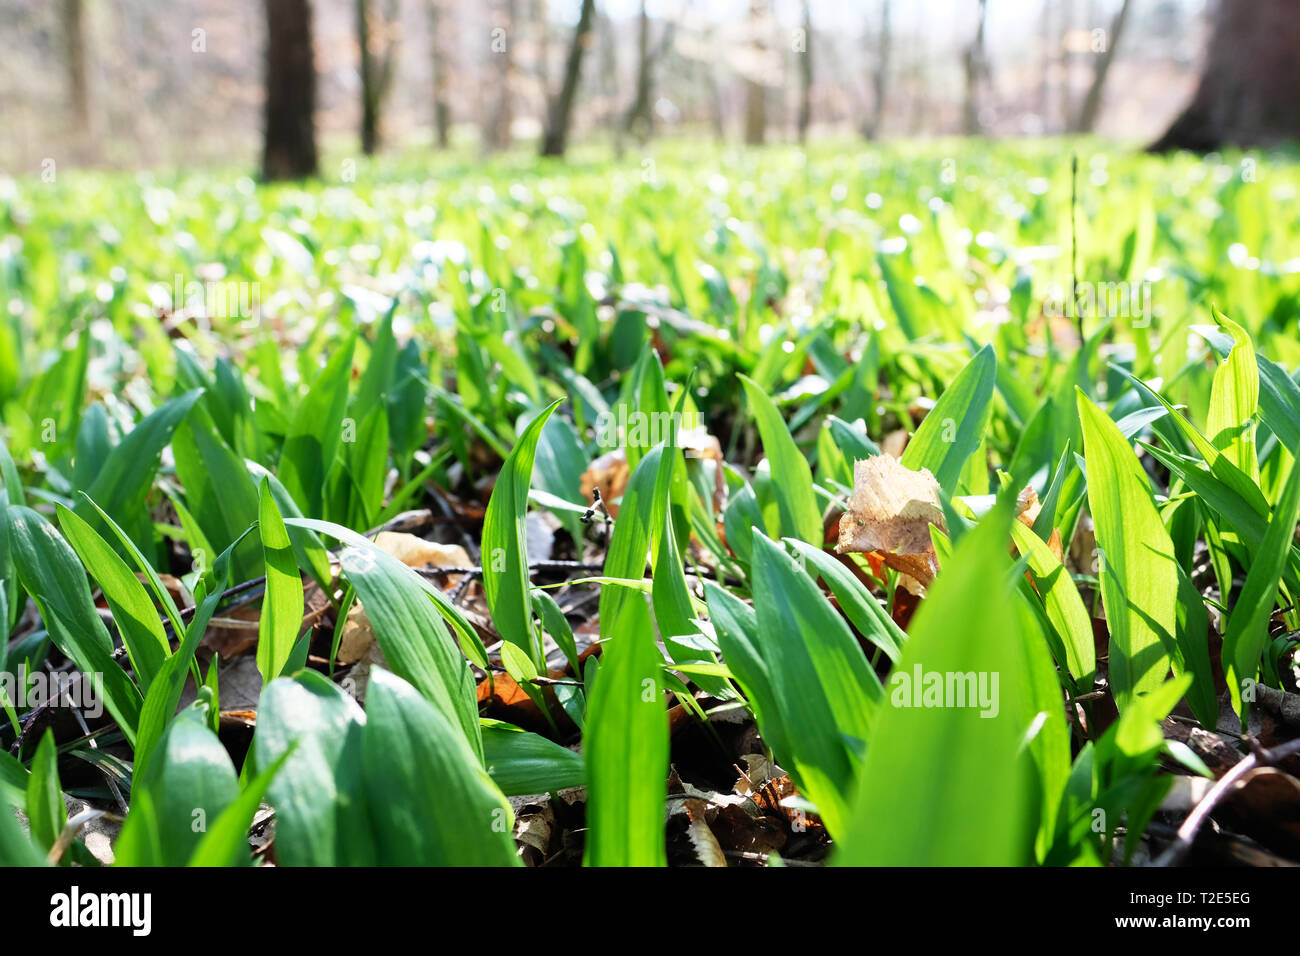 Wald im Frühjahr mit Bär Lauch - Allium ursinum Stockfoto